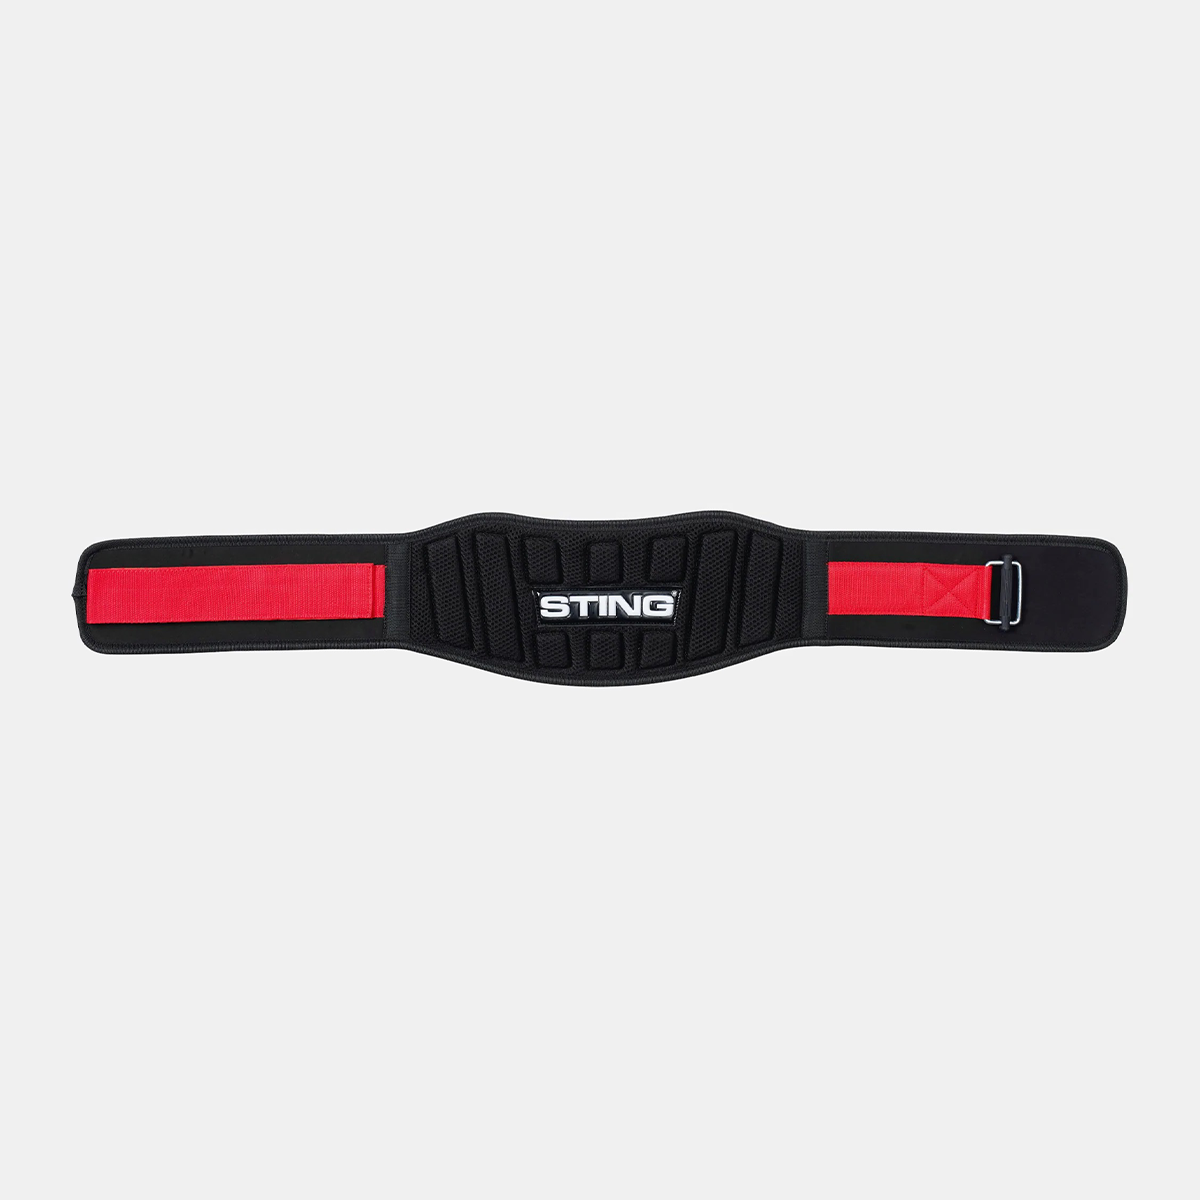 Sting Neoprene Lifting Belt 6" - Black/Red